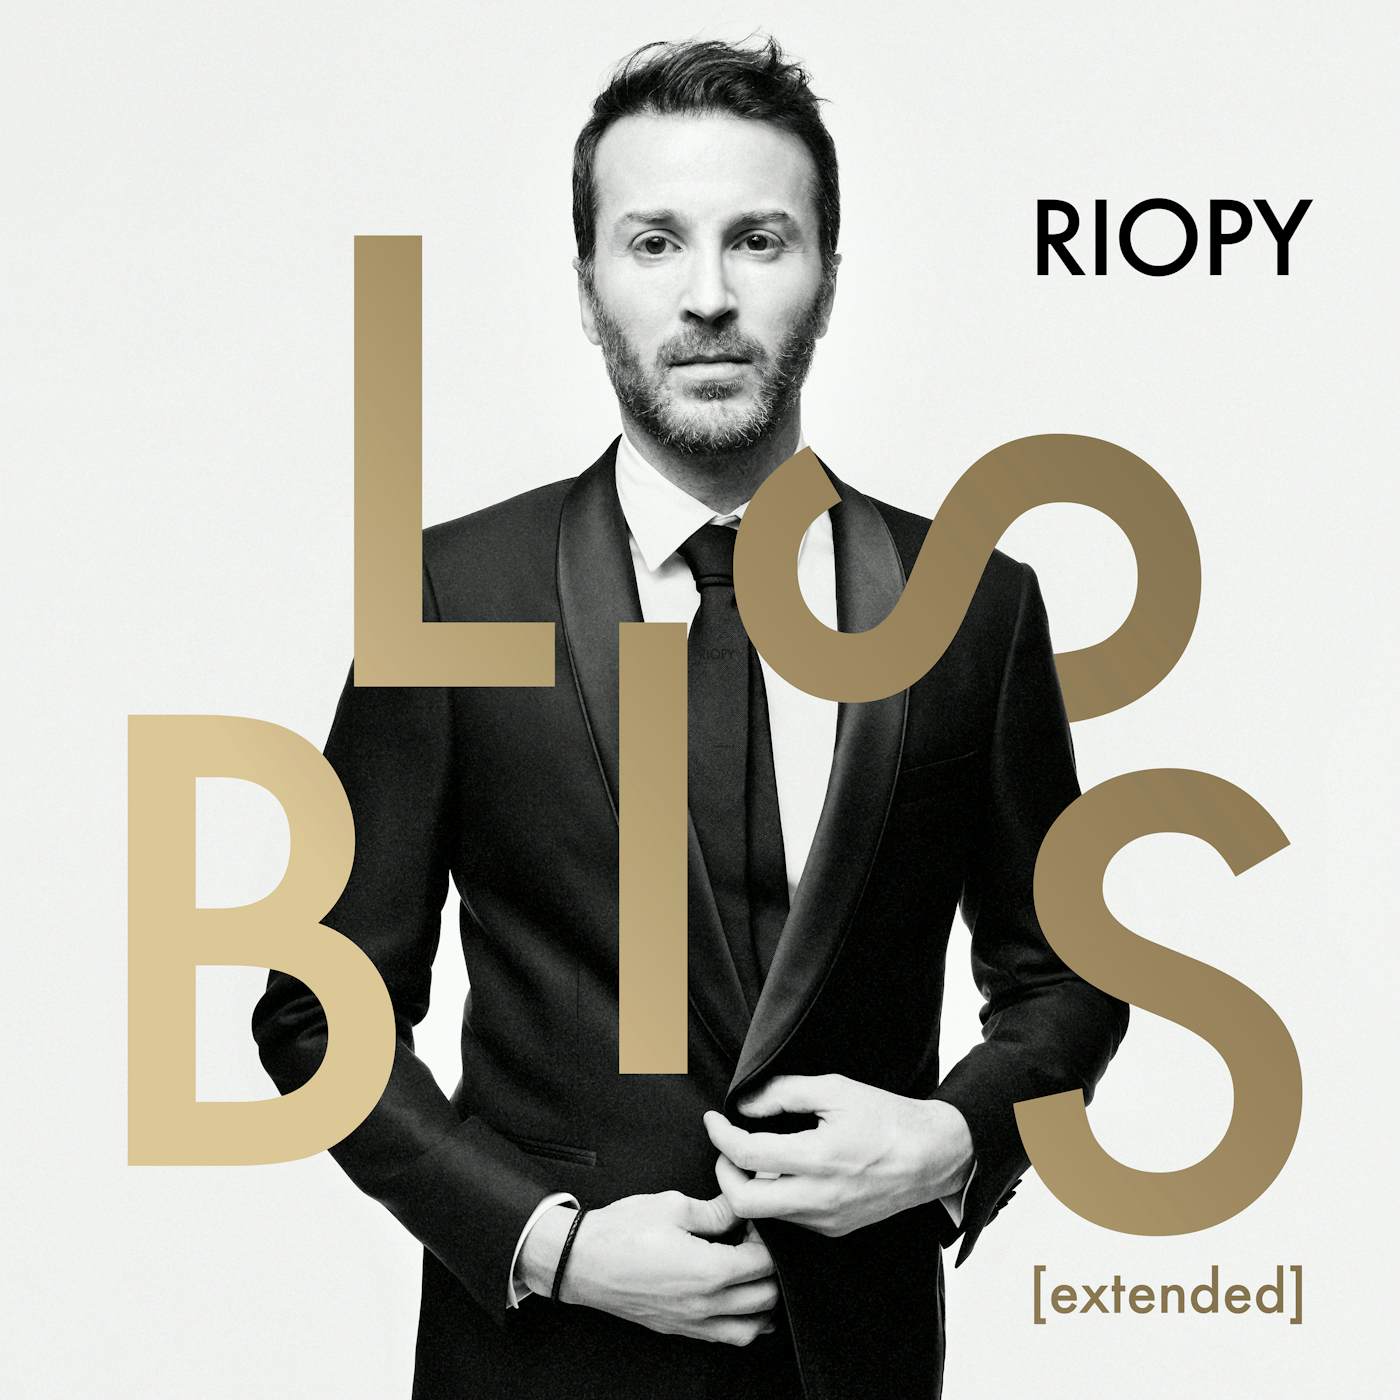 RIOPY Extended Bliss Vinyl Record